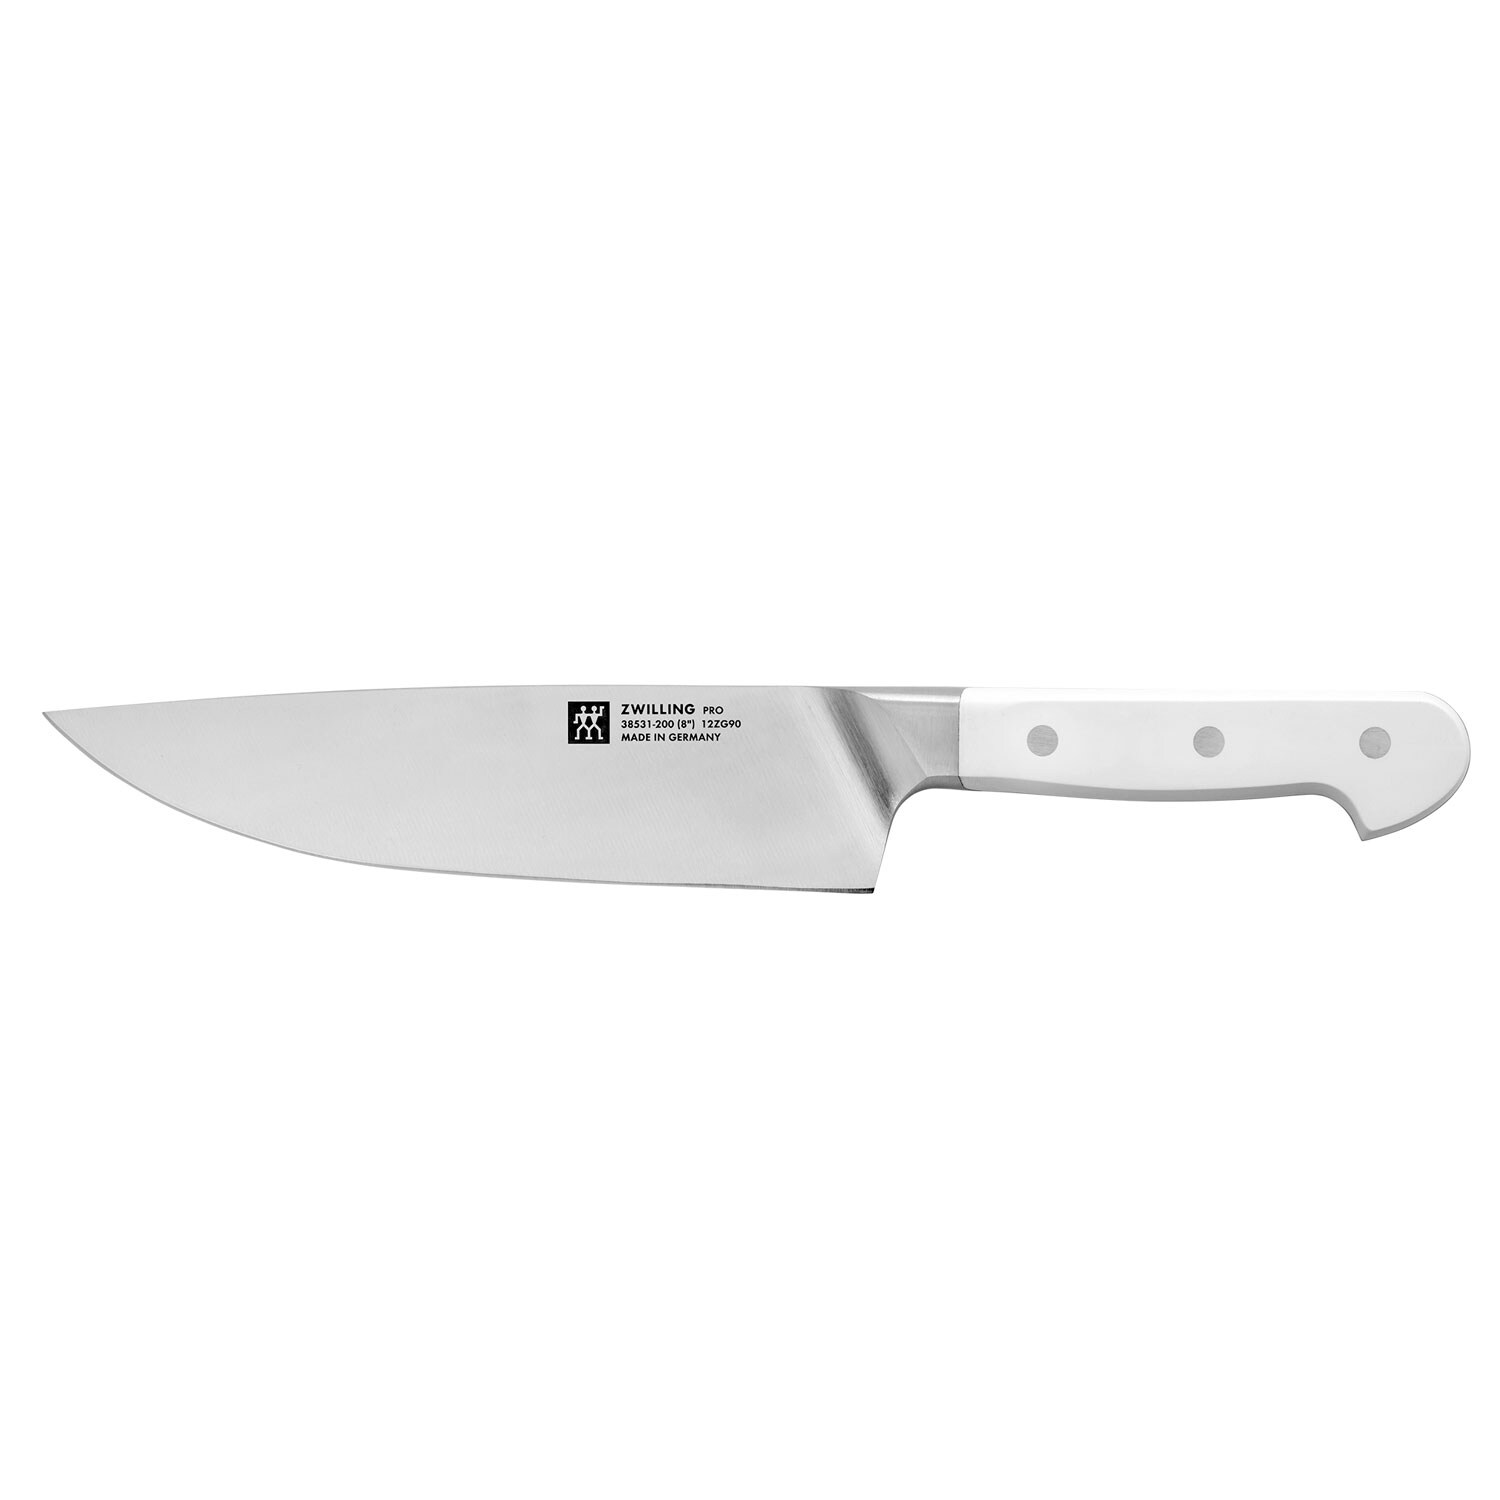 Zwilling Pro Le Blanc Kockkniv 20 Cm - Kockknivar Rostfritt Stål Vit